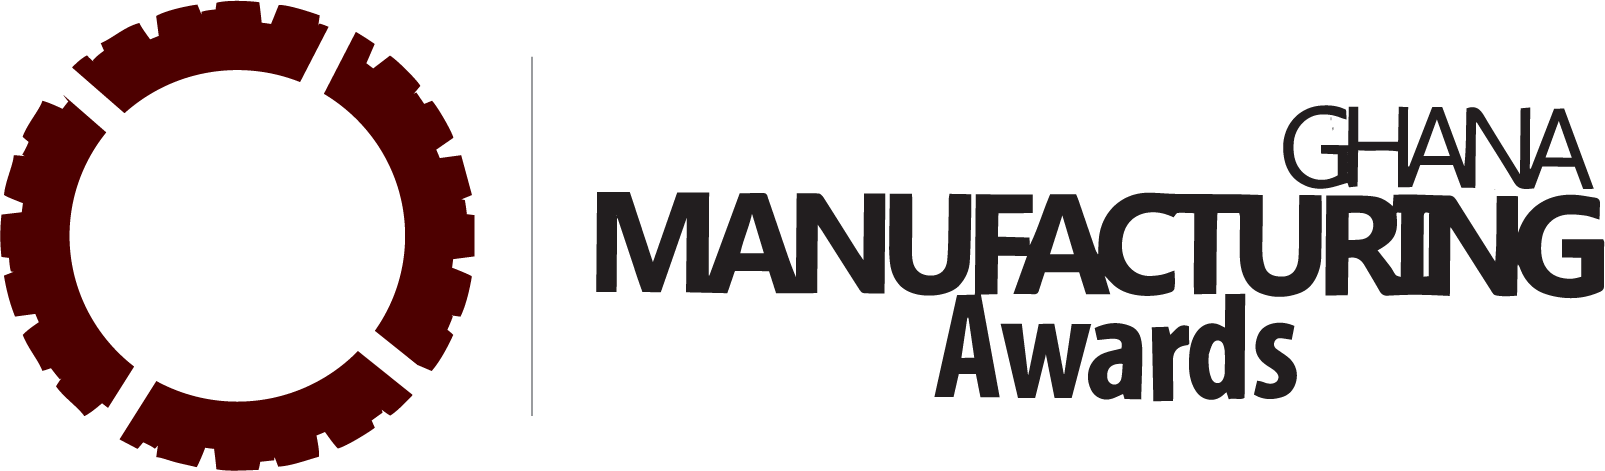 Ghana Manufacturing Awards